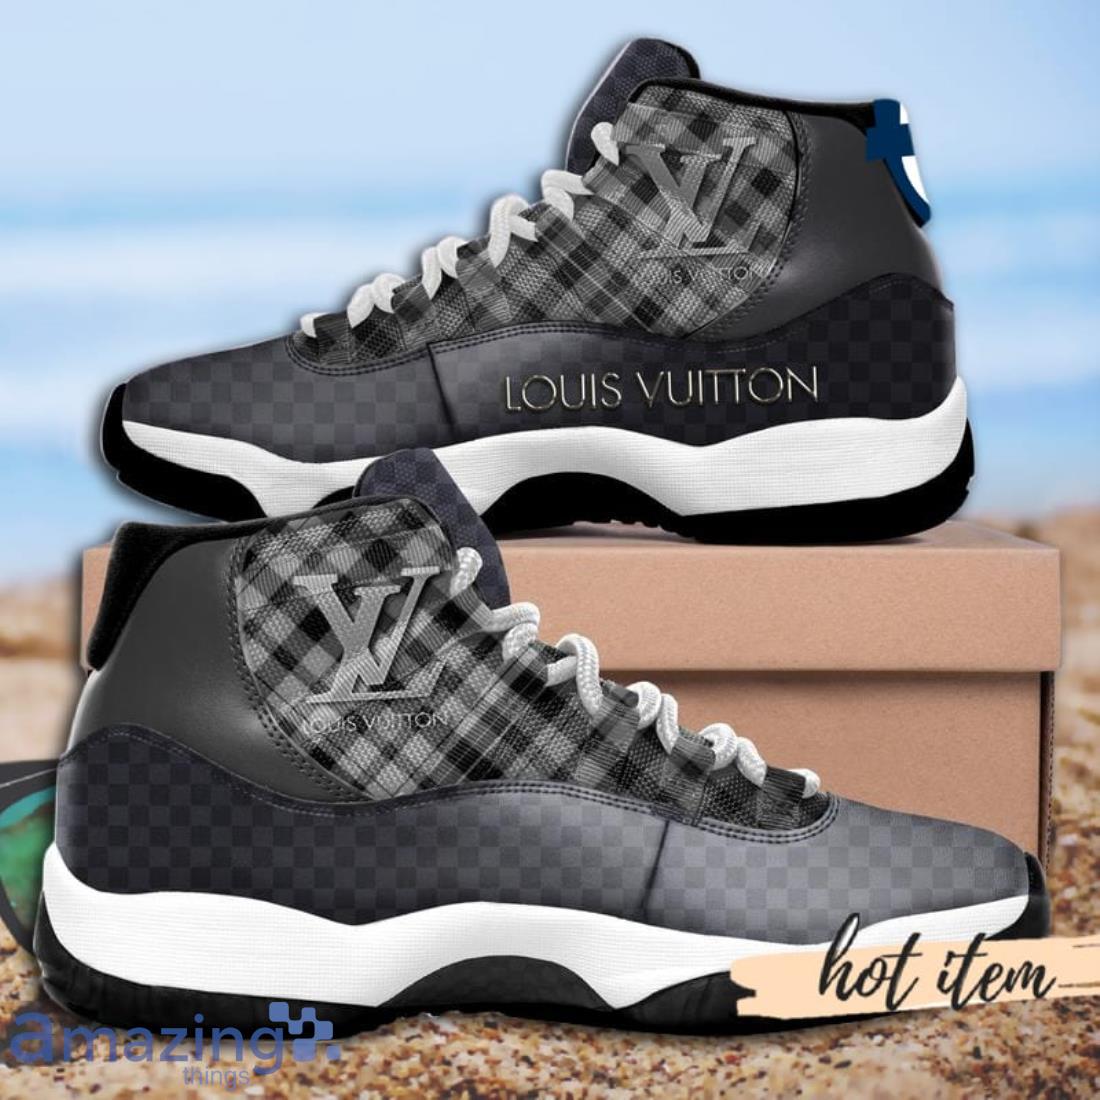 Louis Vuitton Air Jordan 11 Shoes Fashsion Shoes For Men And Women